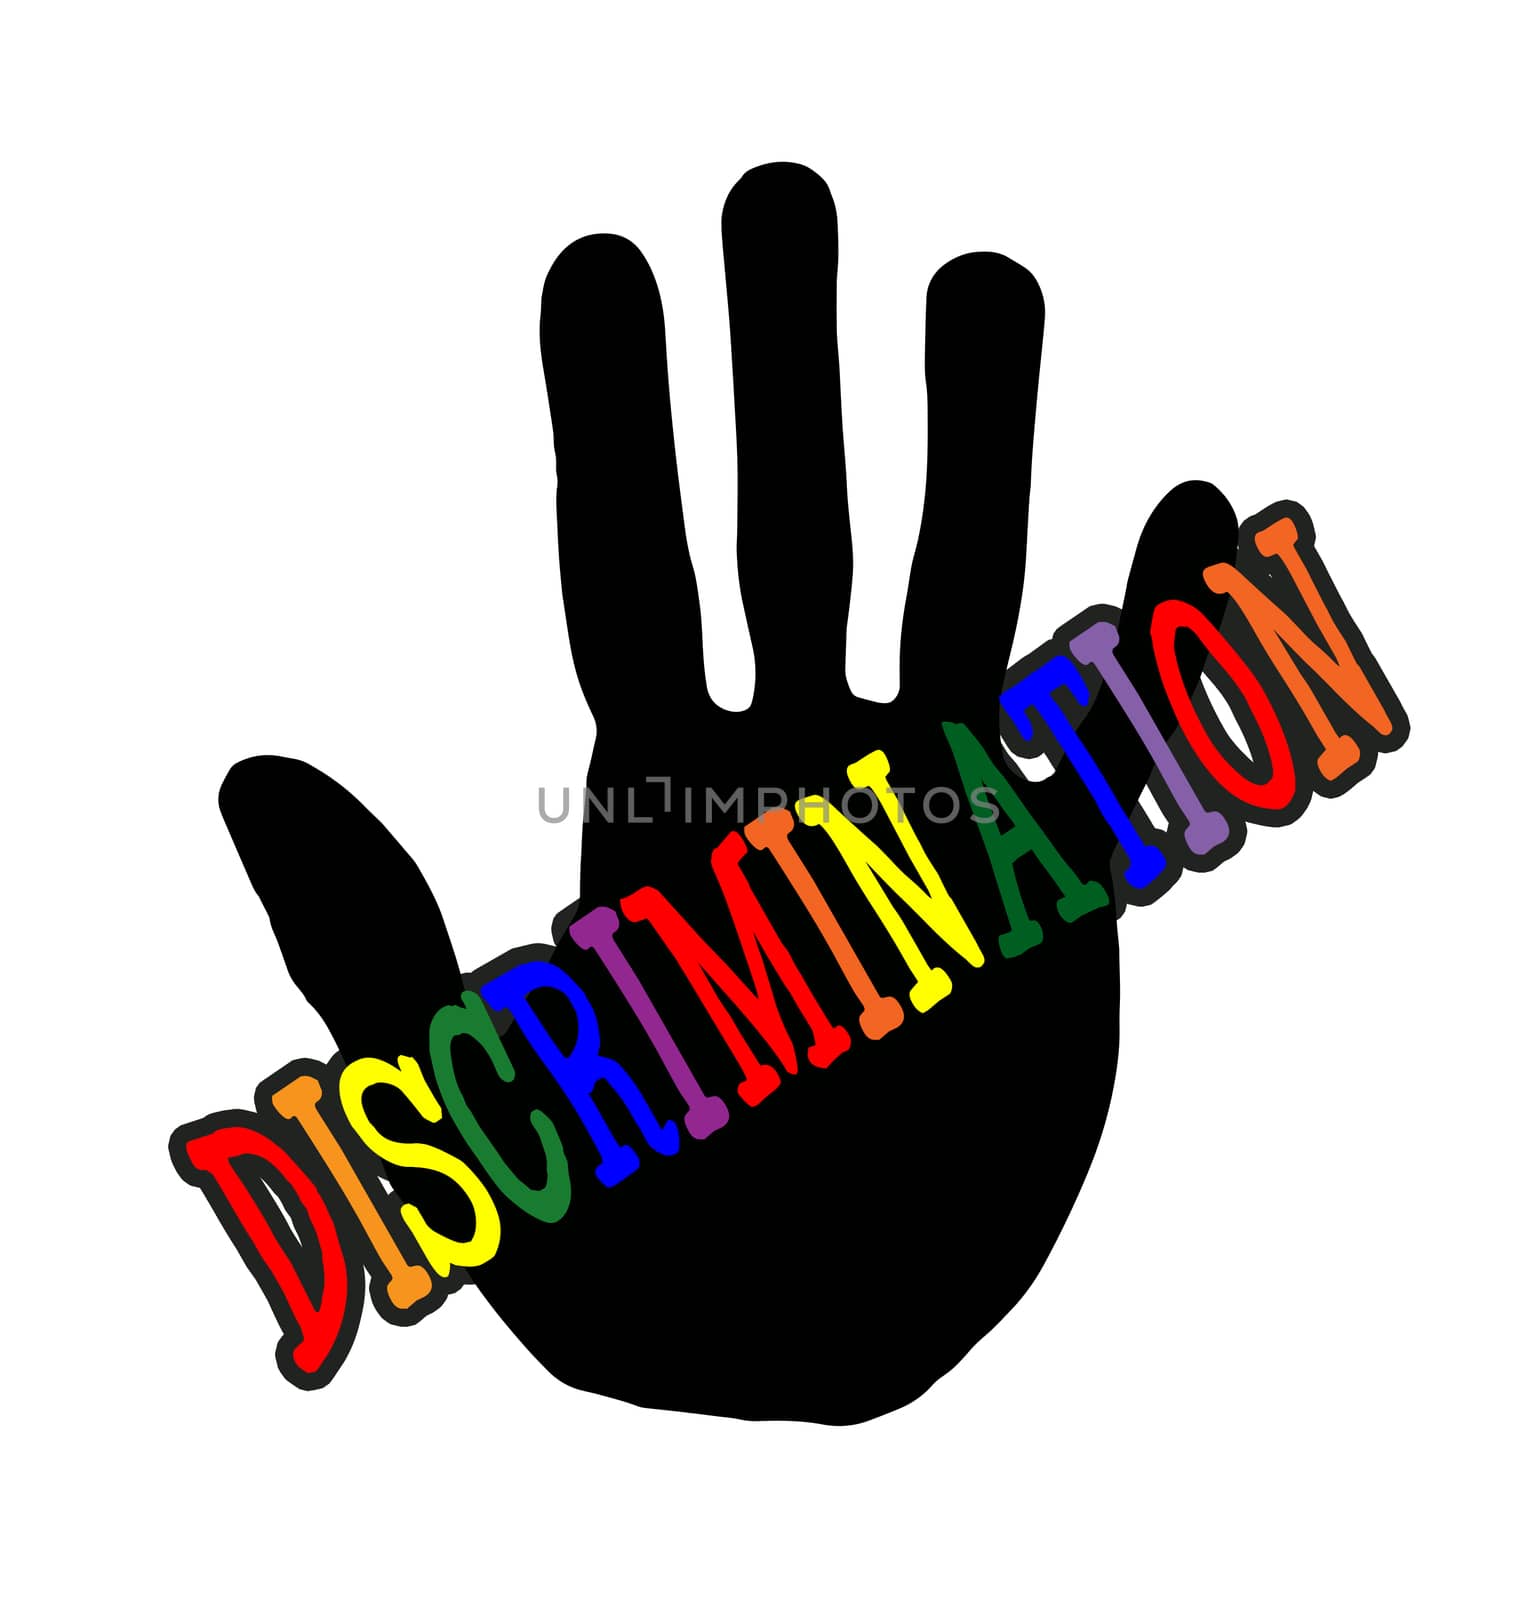 Handprint discrimination by Milovan